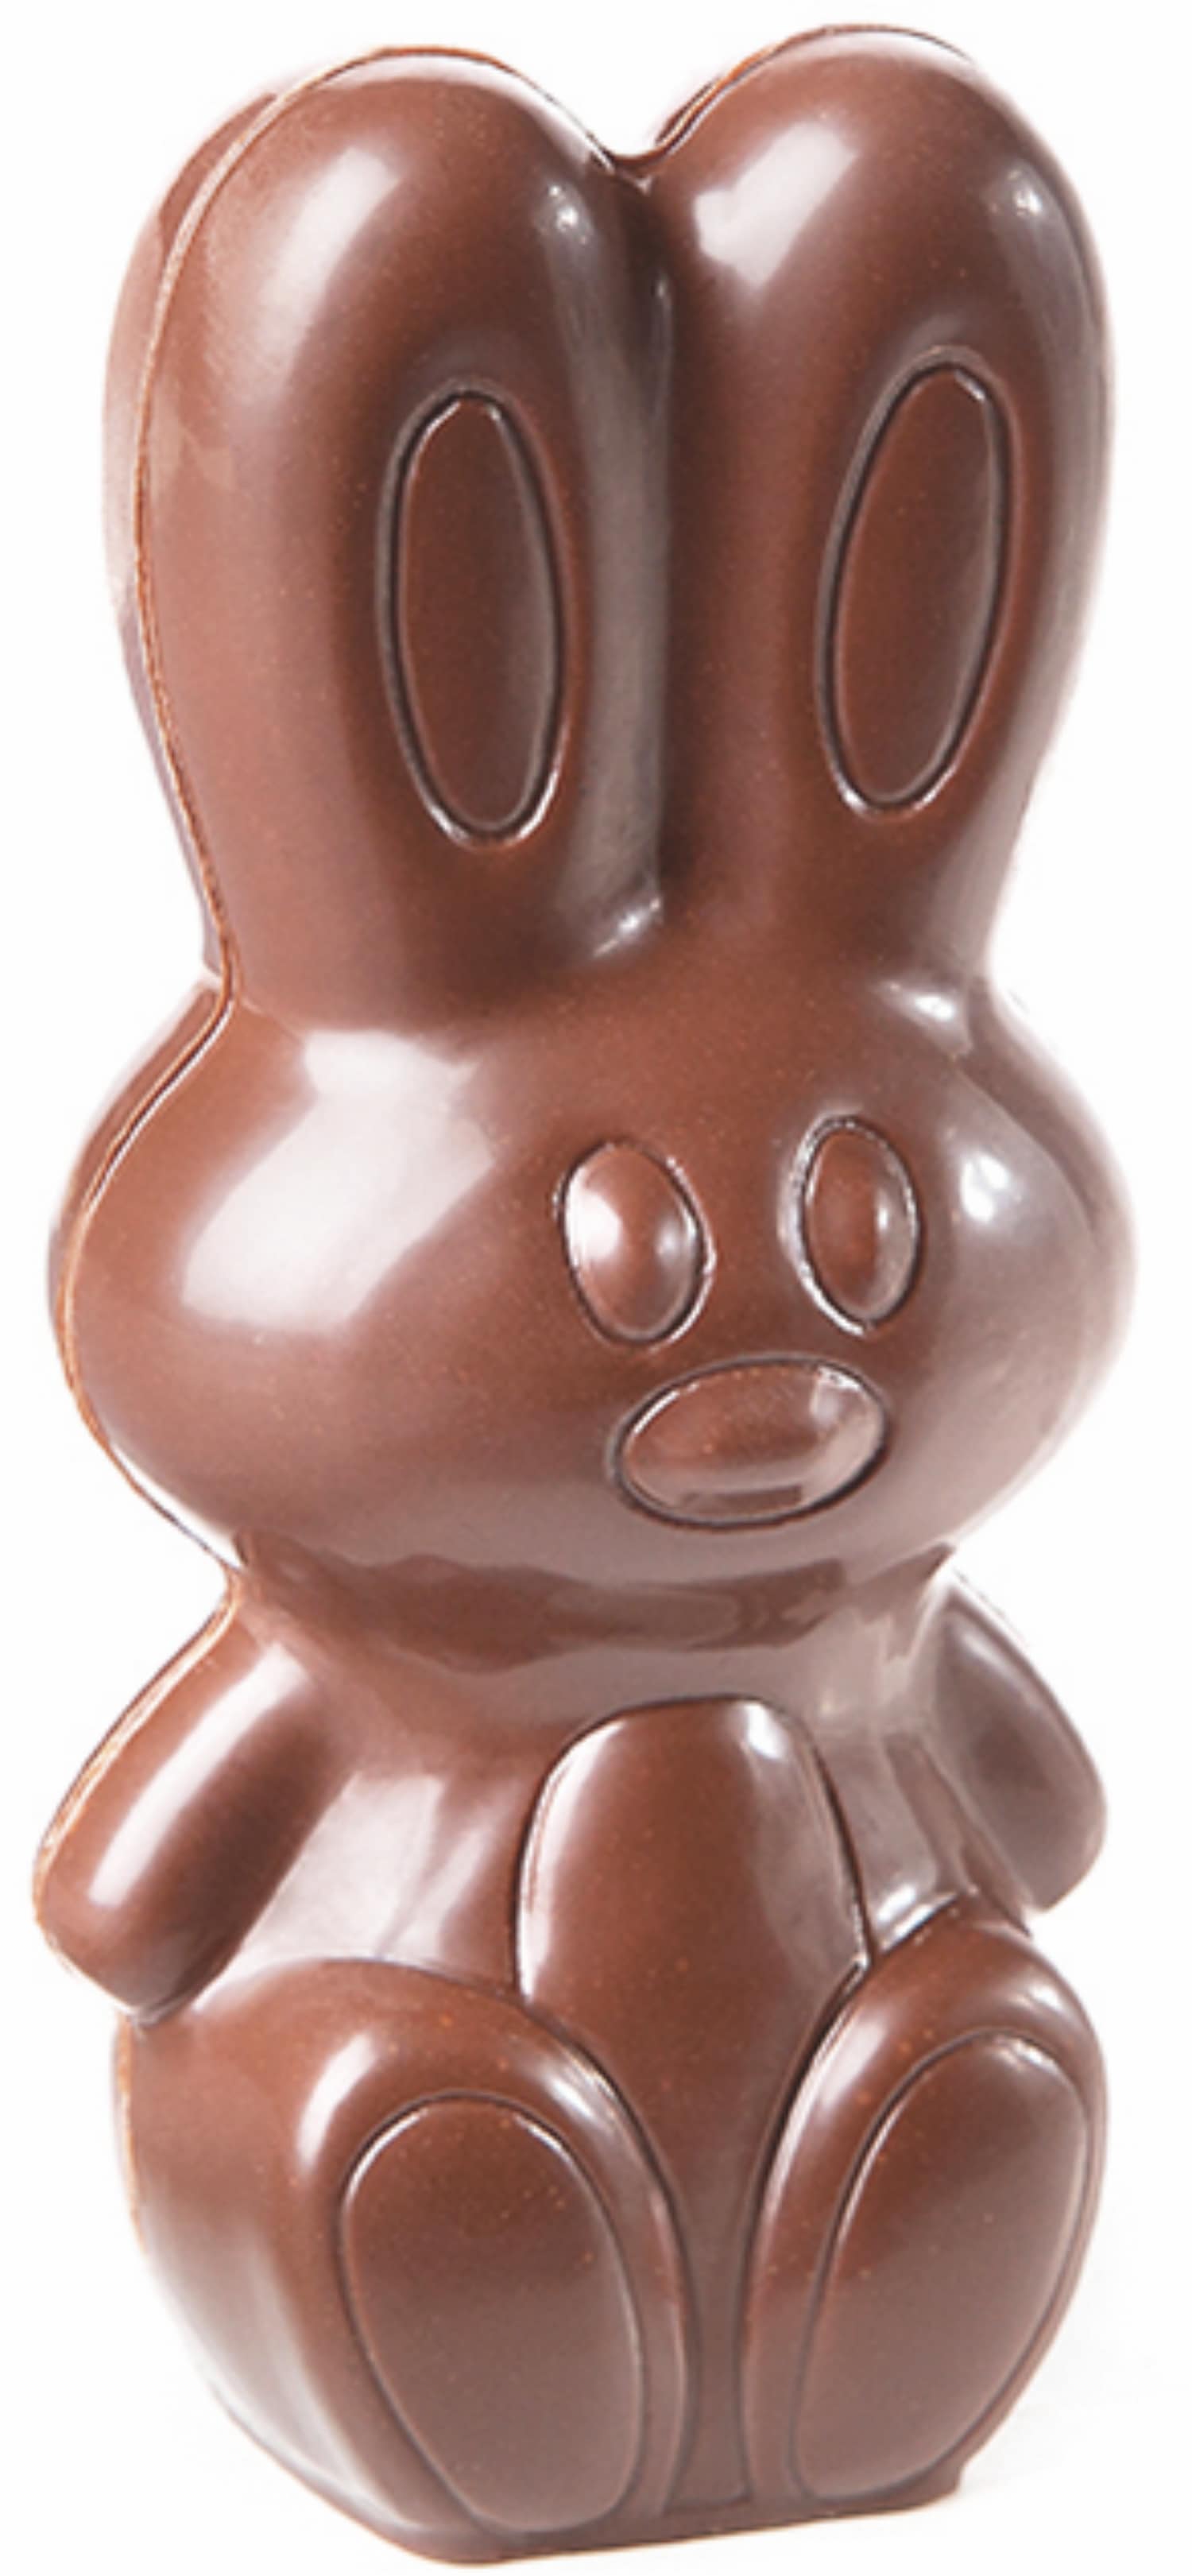 Chocolate mould "rabbit" 421739